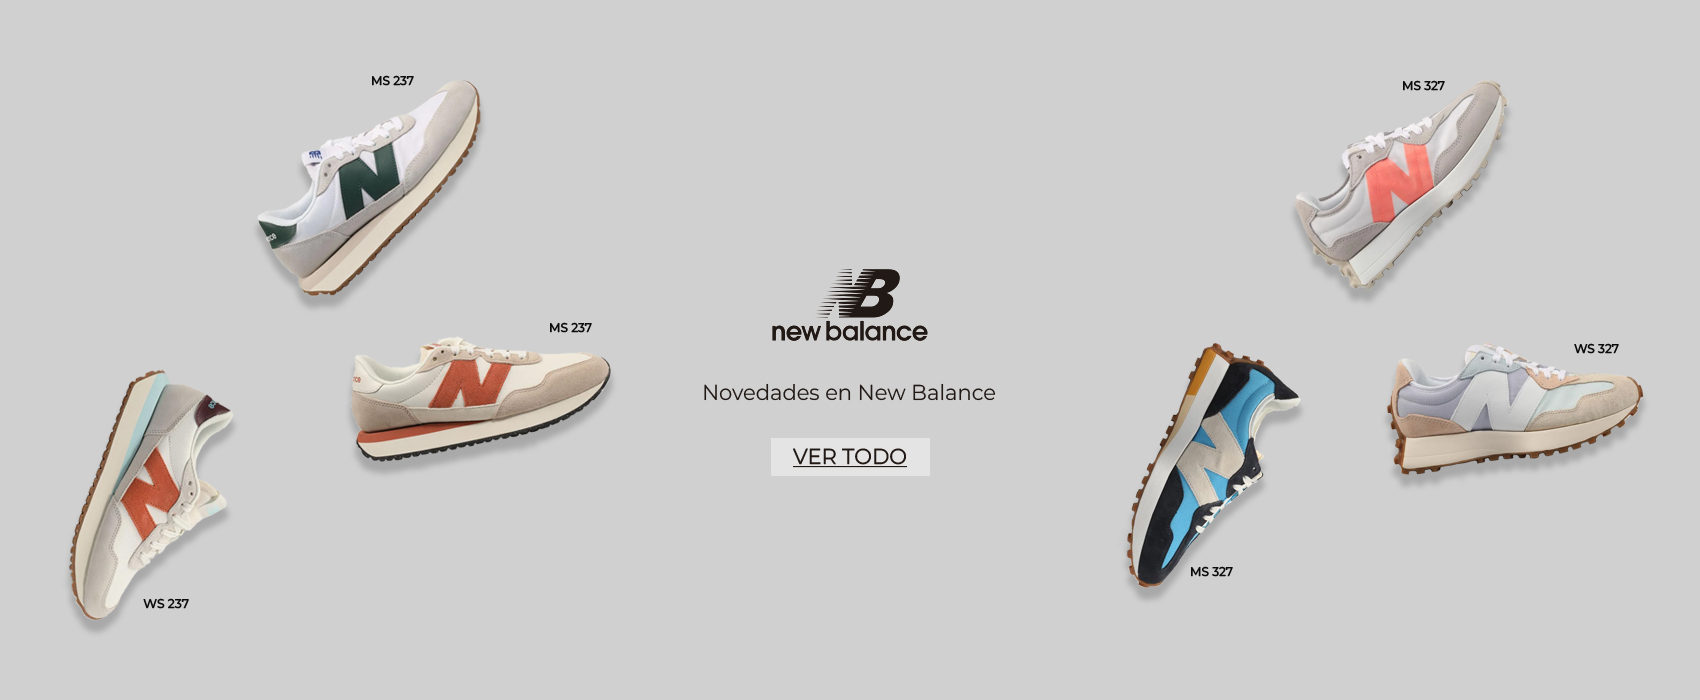 Zapatillas New Balance MS237, MS327, WS327, WS237